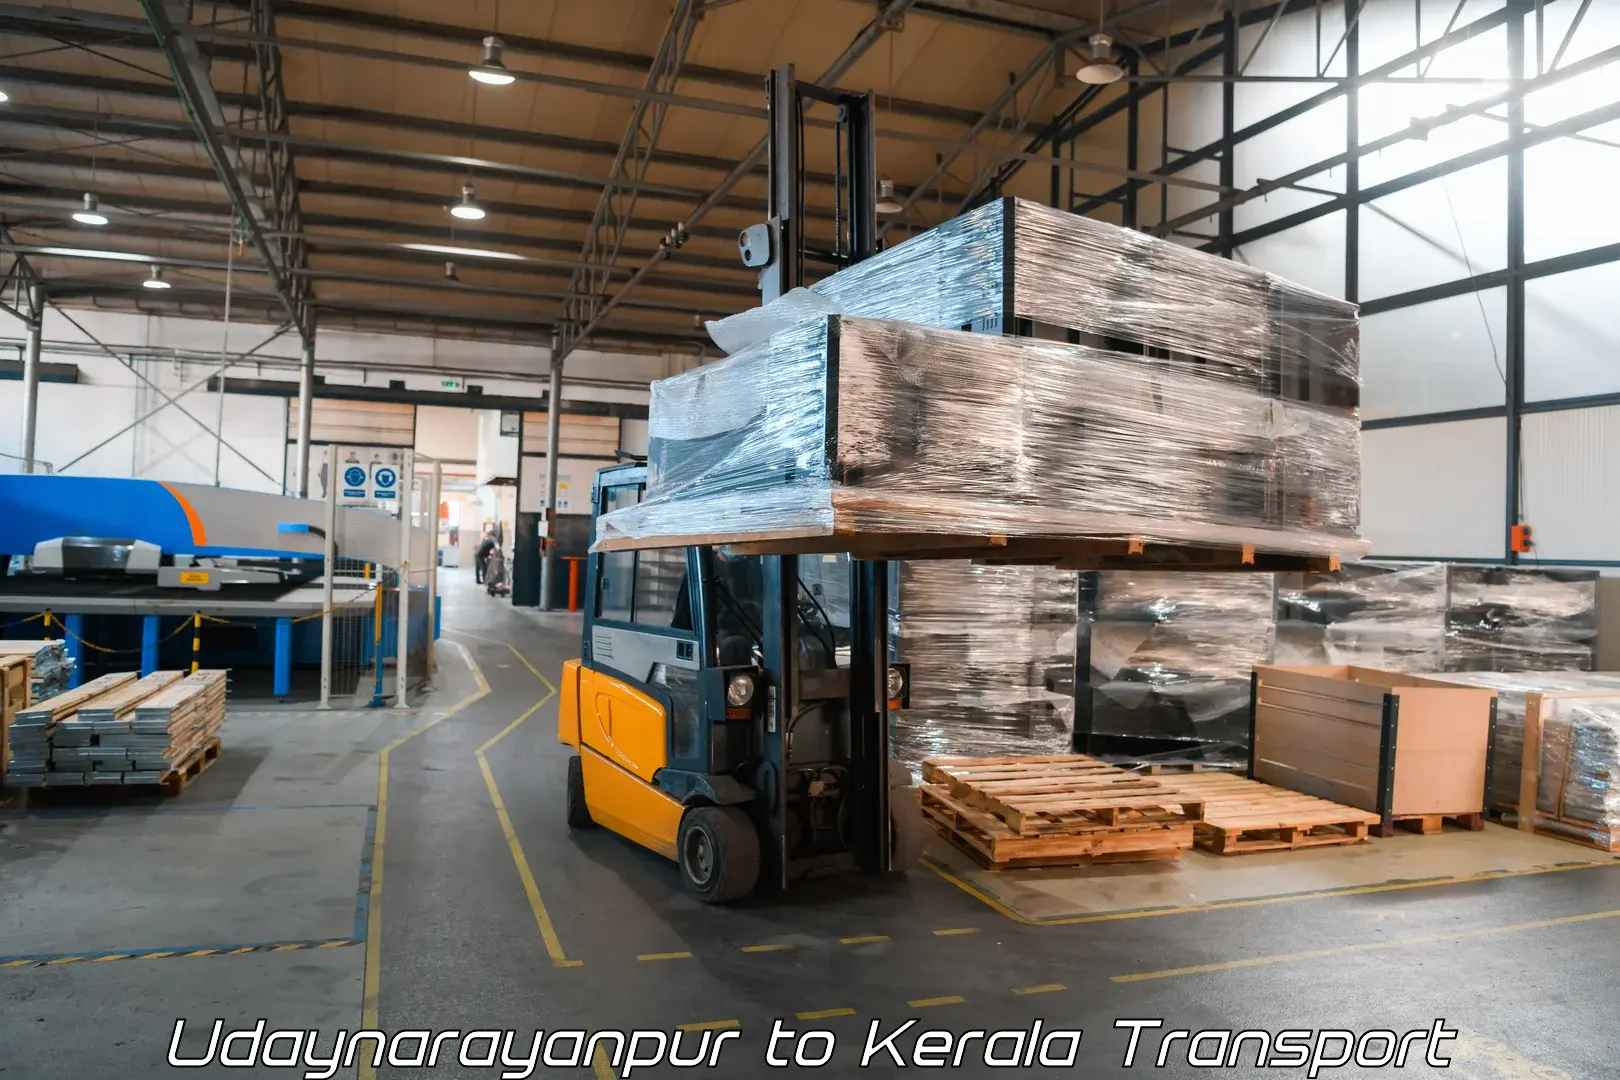 Transport in sharing Udaynarayanpur to Kerala